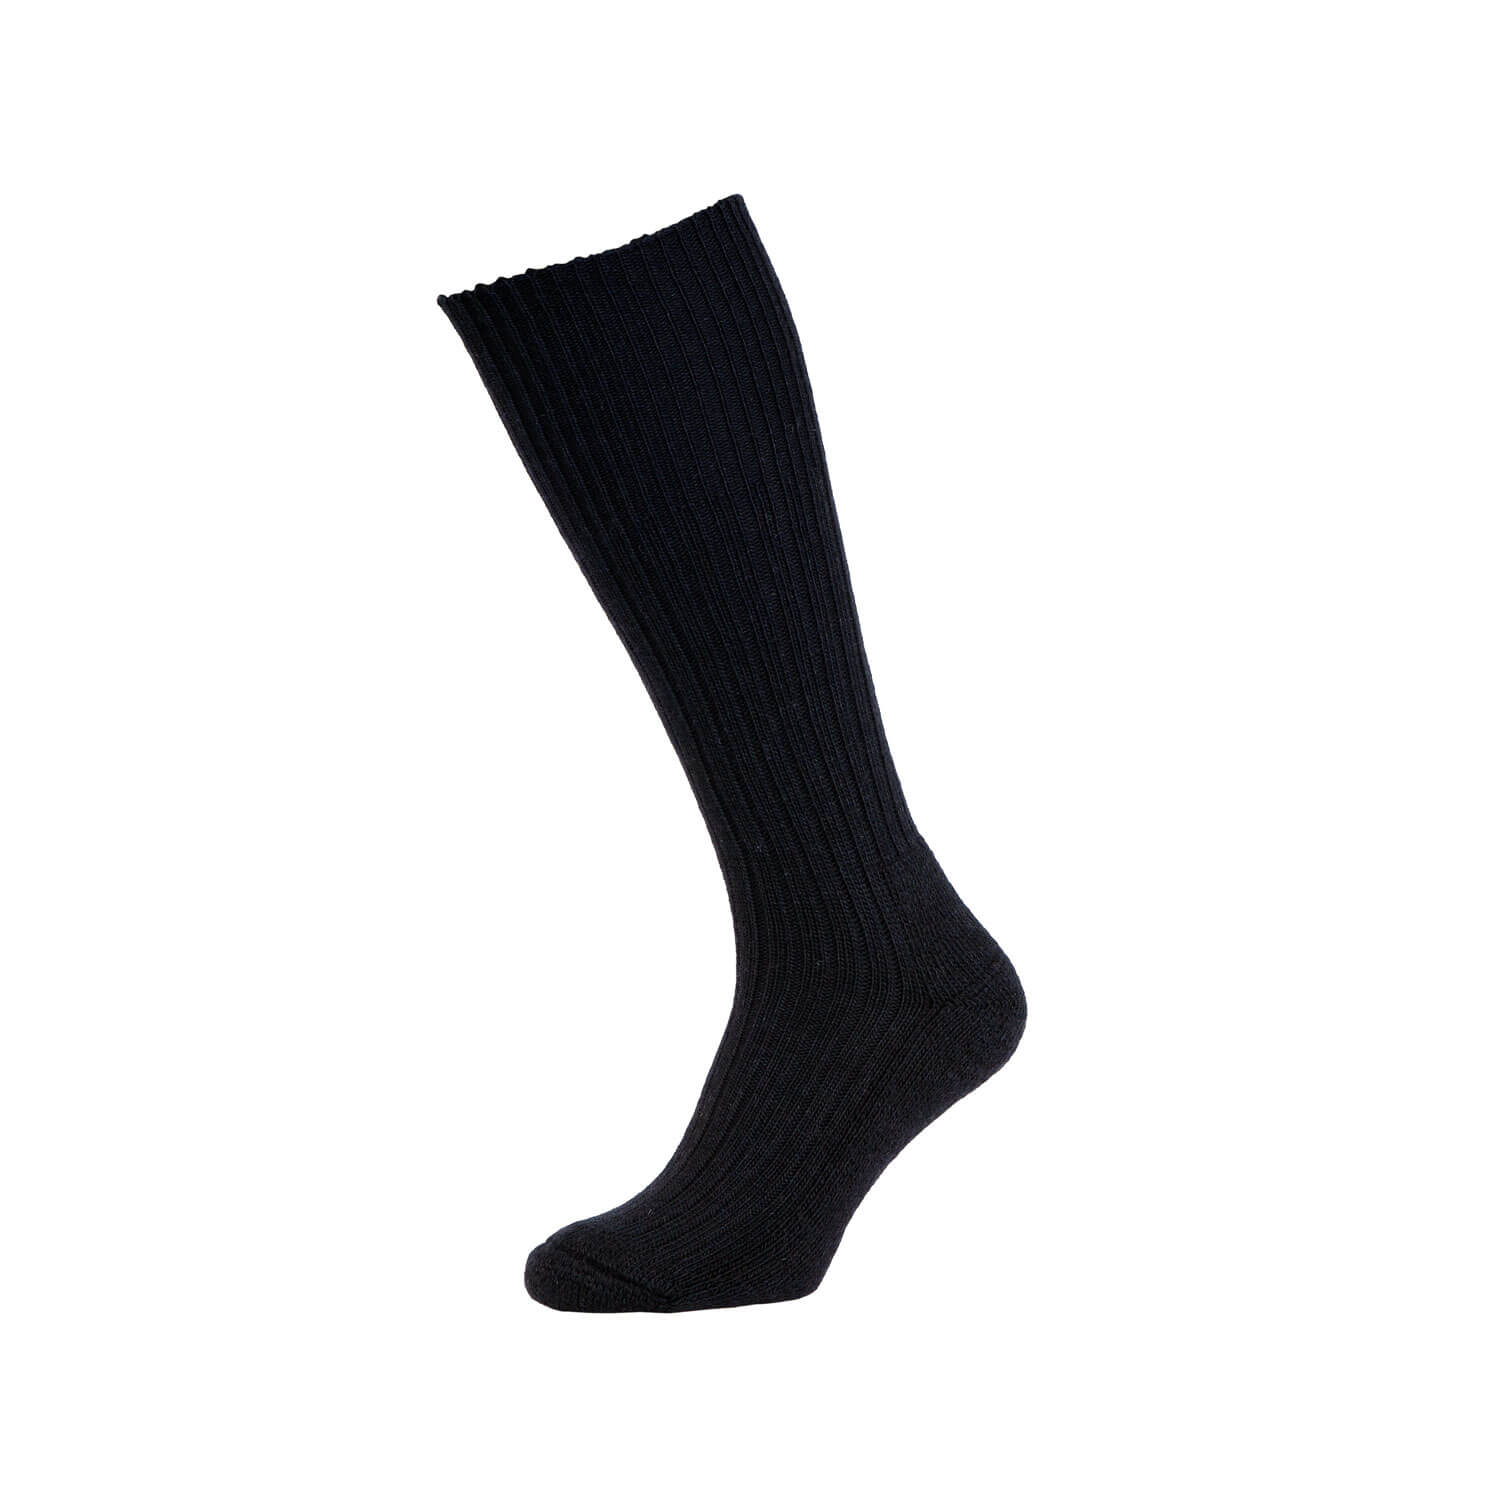 Hj Hall Commando Socks - Black 1 Shaws Department Stores